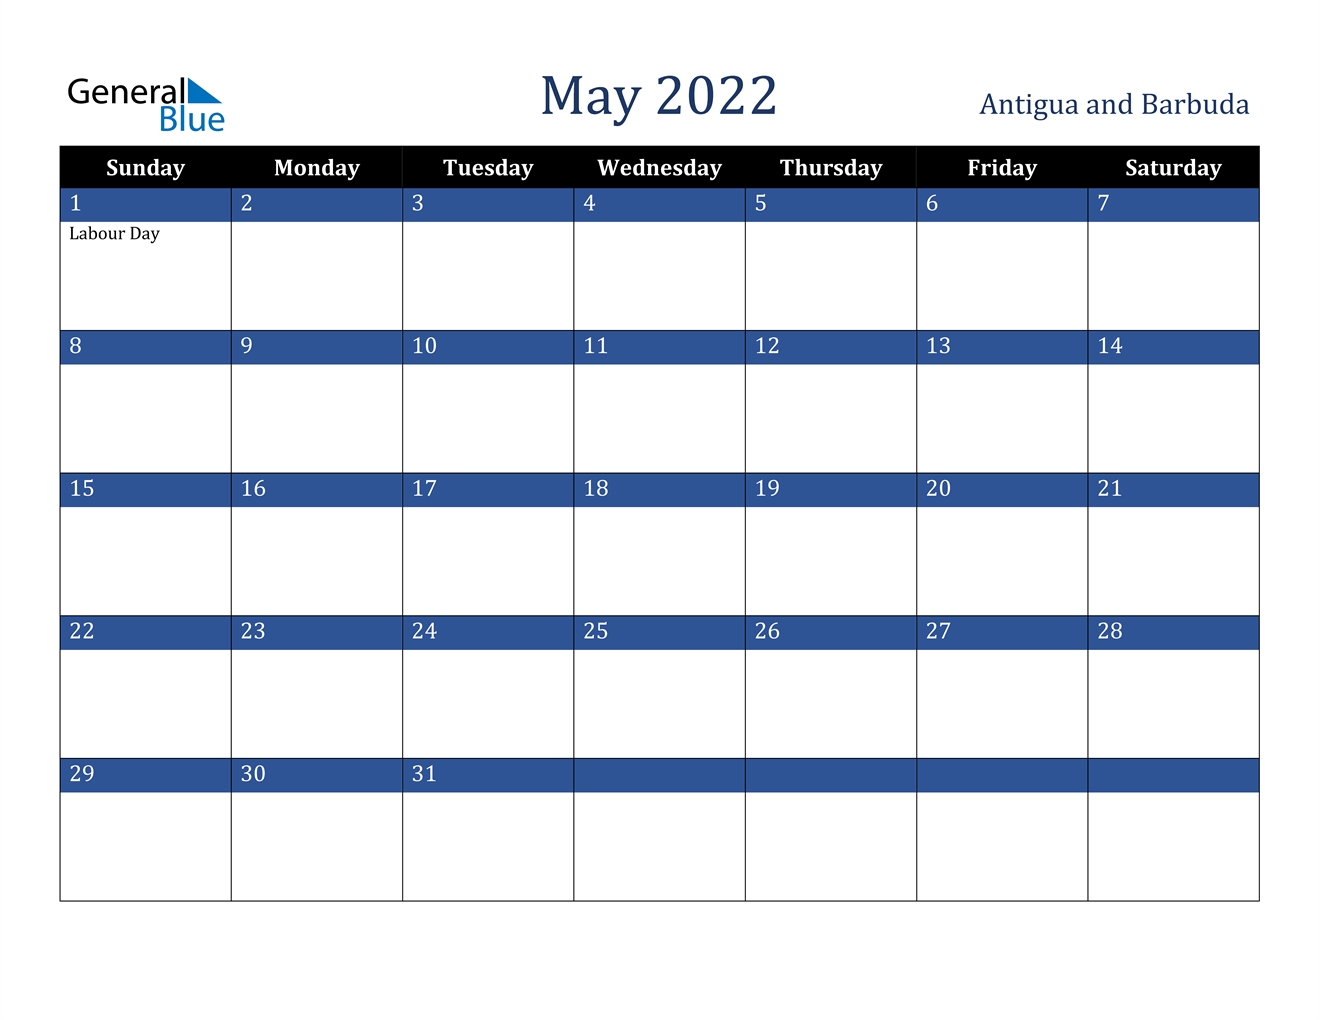 May 2022 Calendar - Antigua And Barbuda